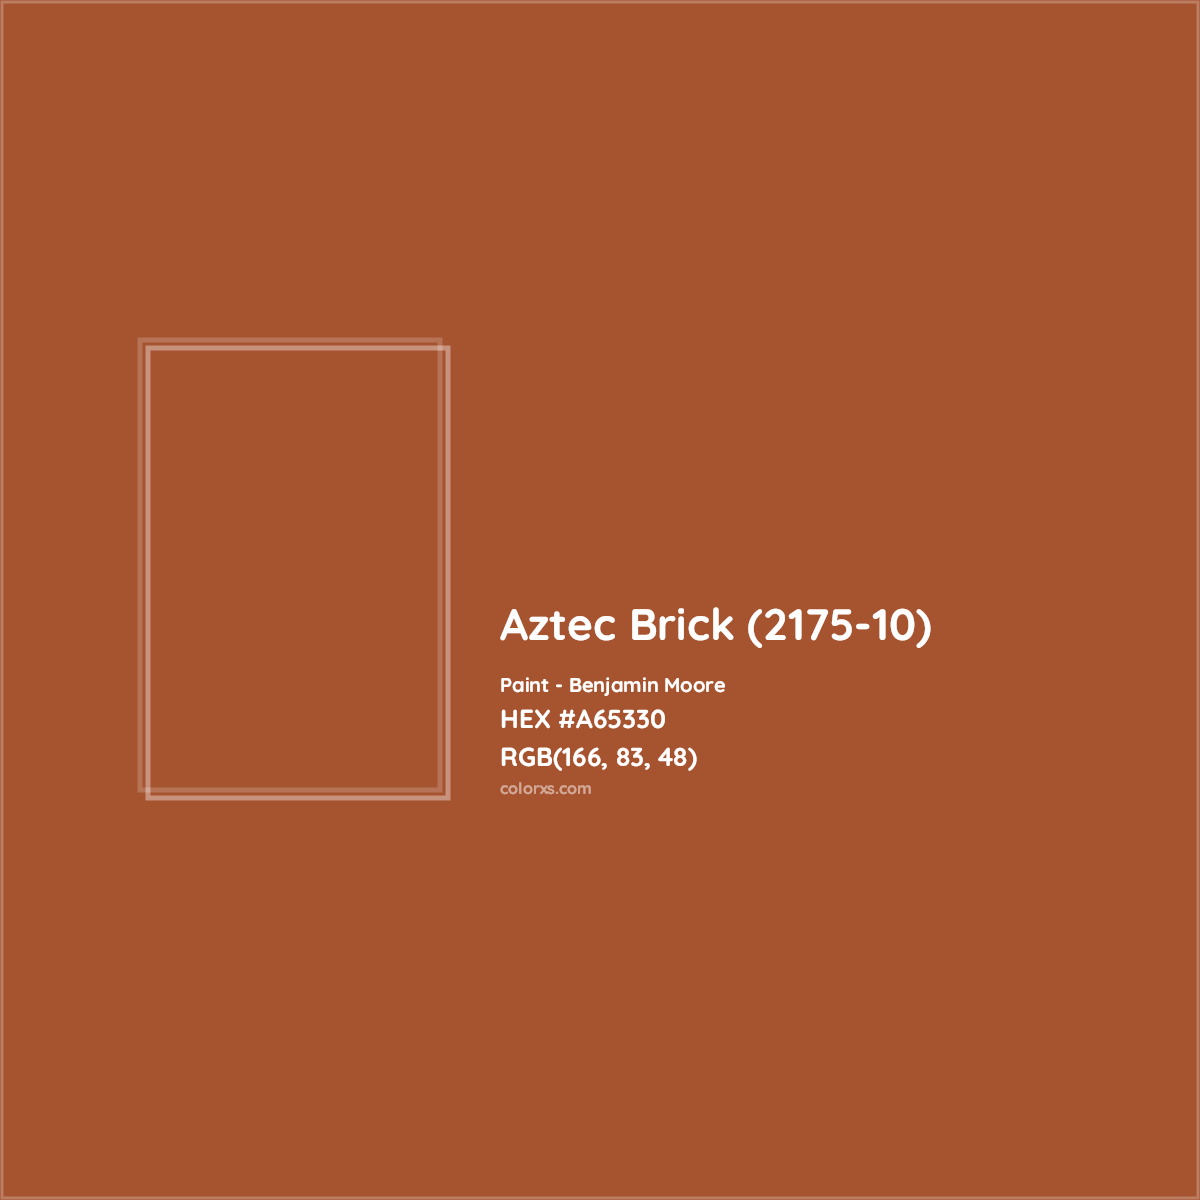 Aztec Brick 2175-10